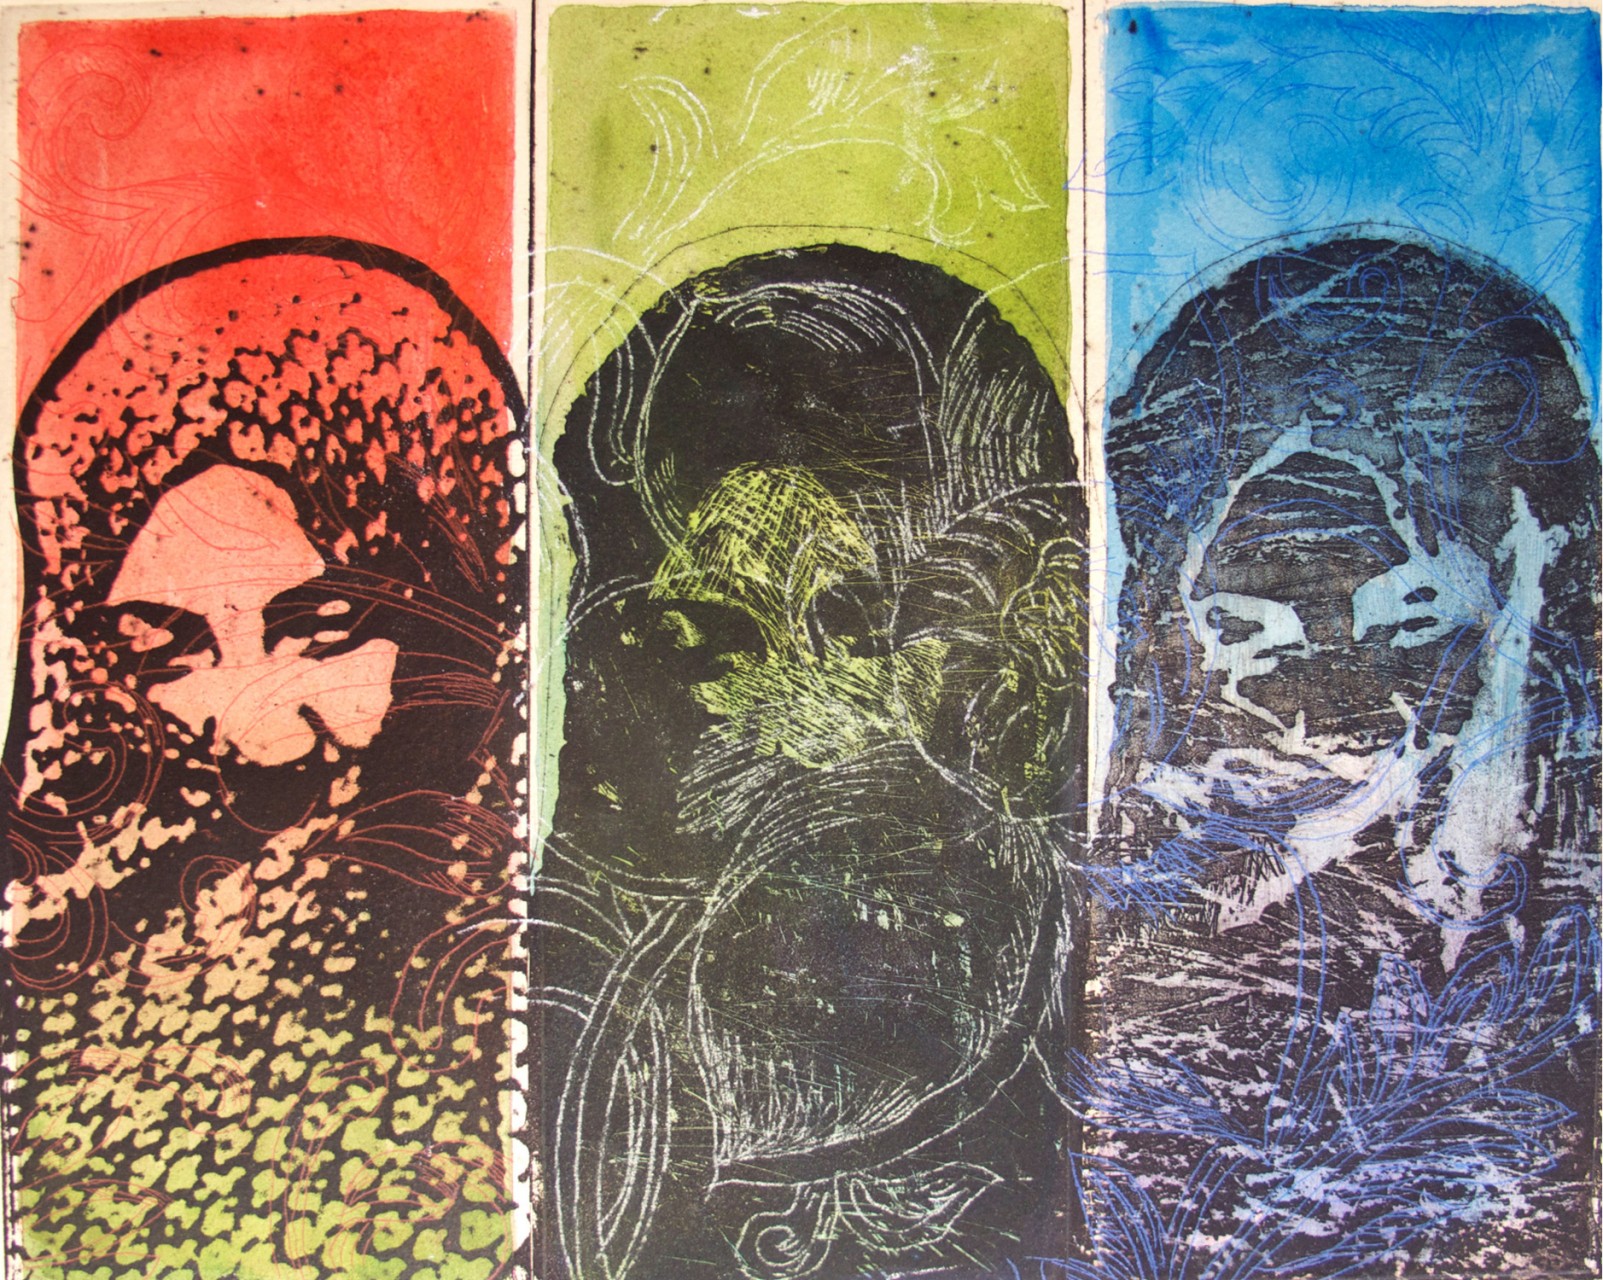 “Three Women", 2015, hand painted print, image size 12X15